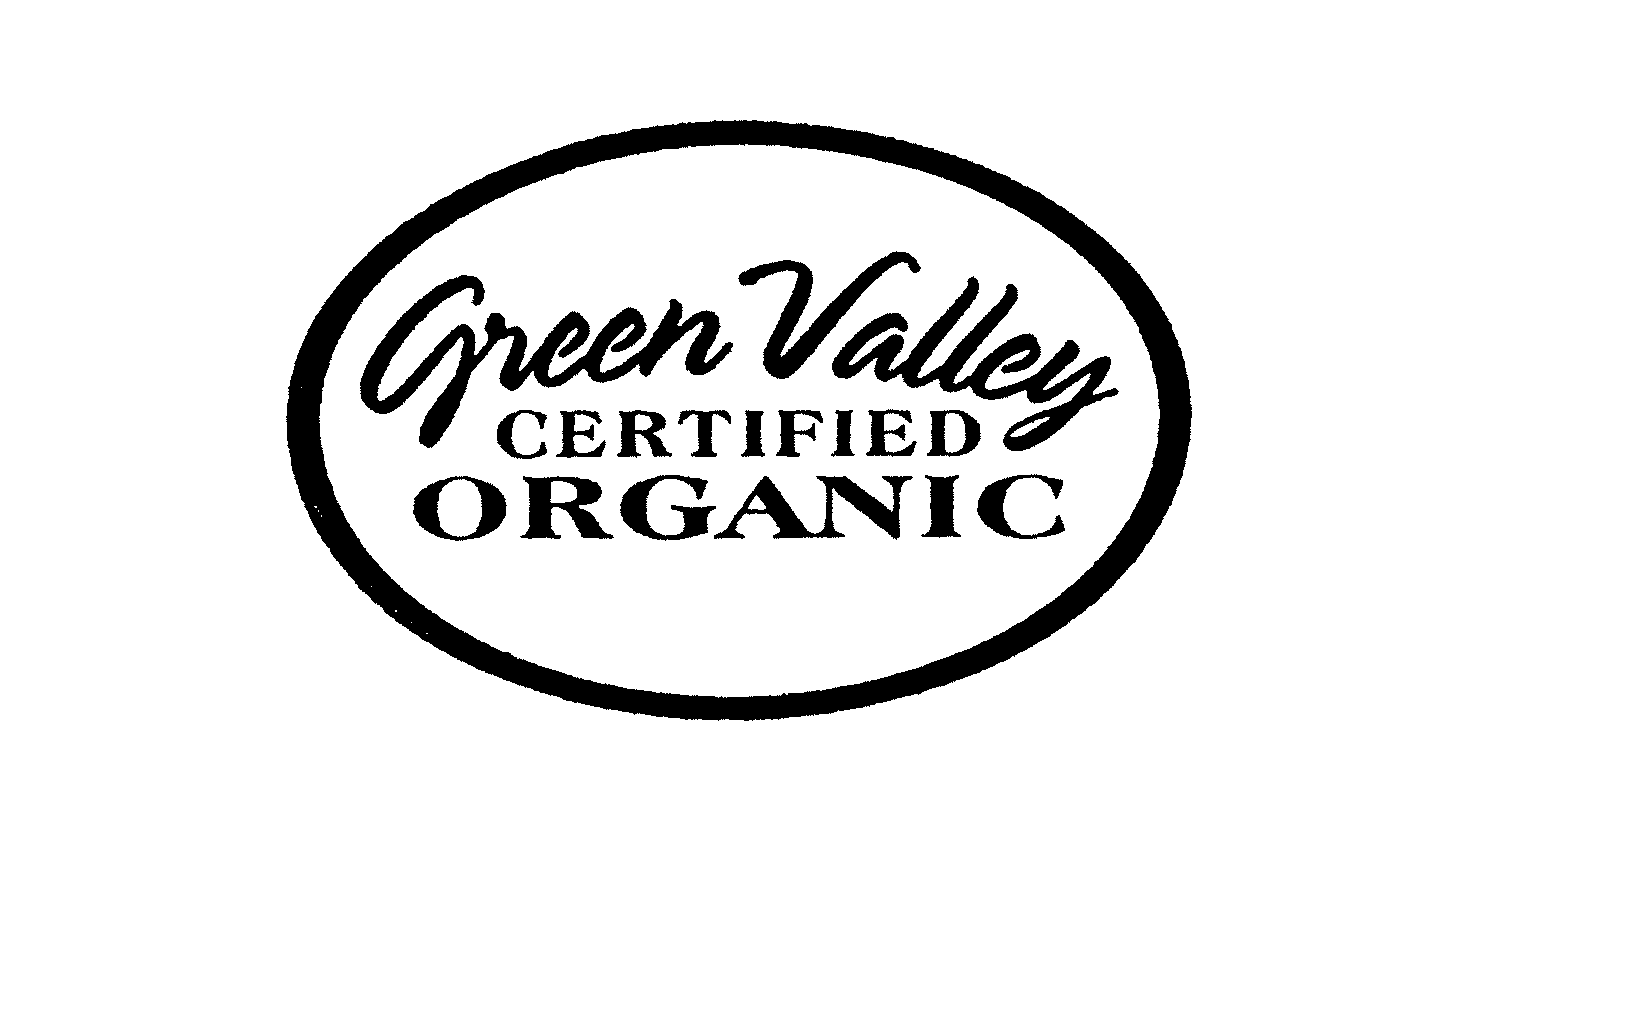  GREEN VALLEY CERTIFIED ORGANIC